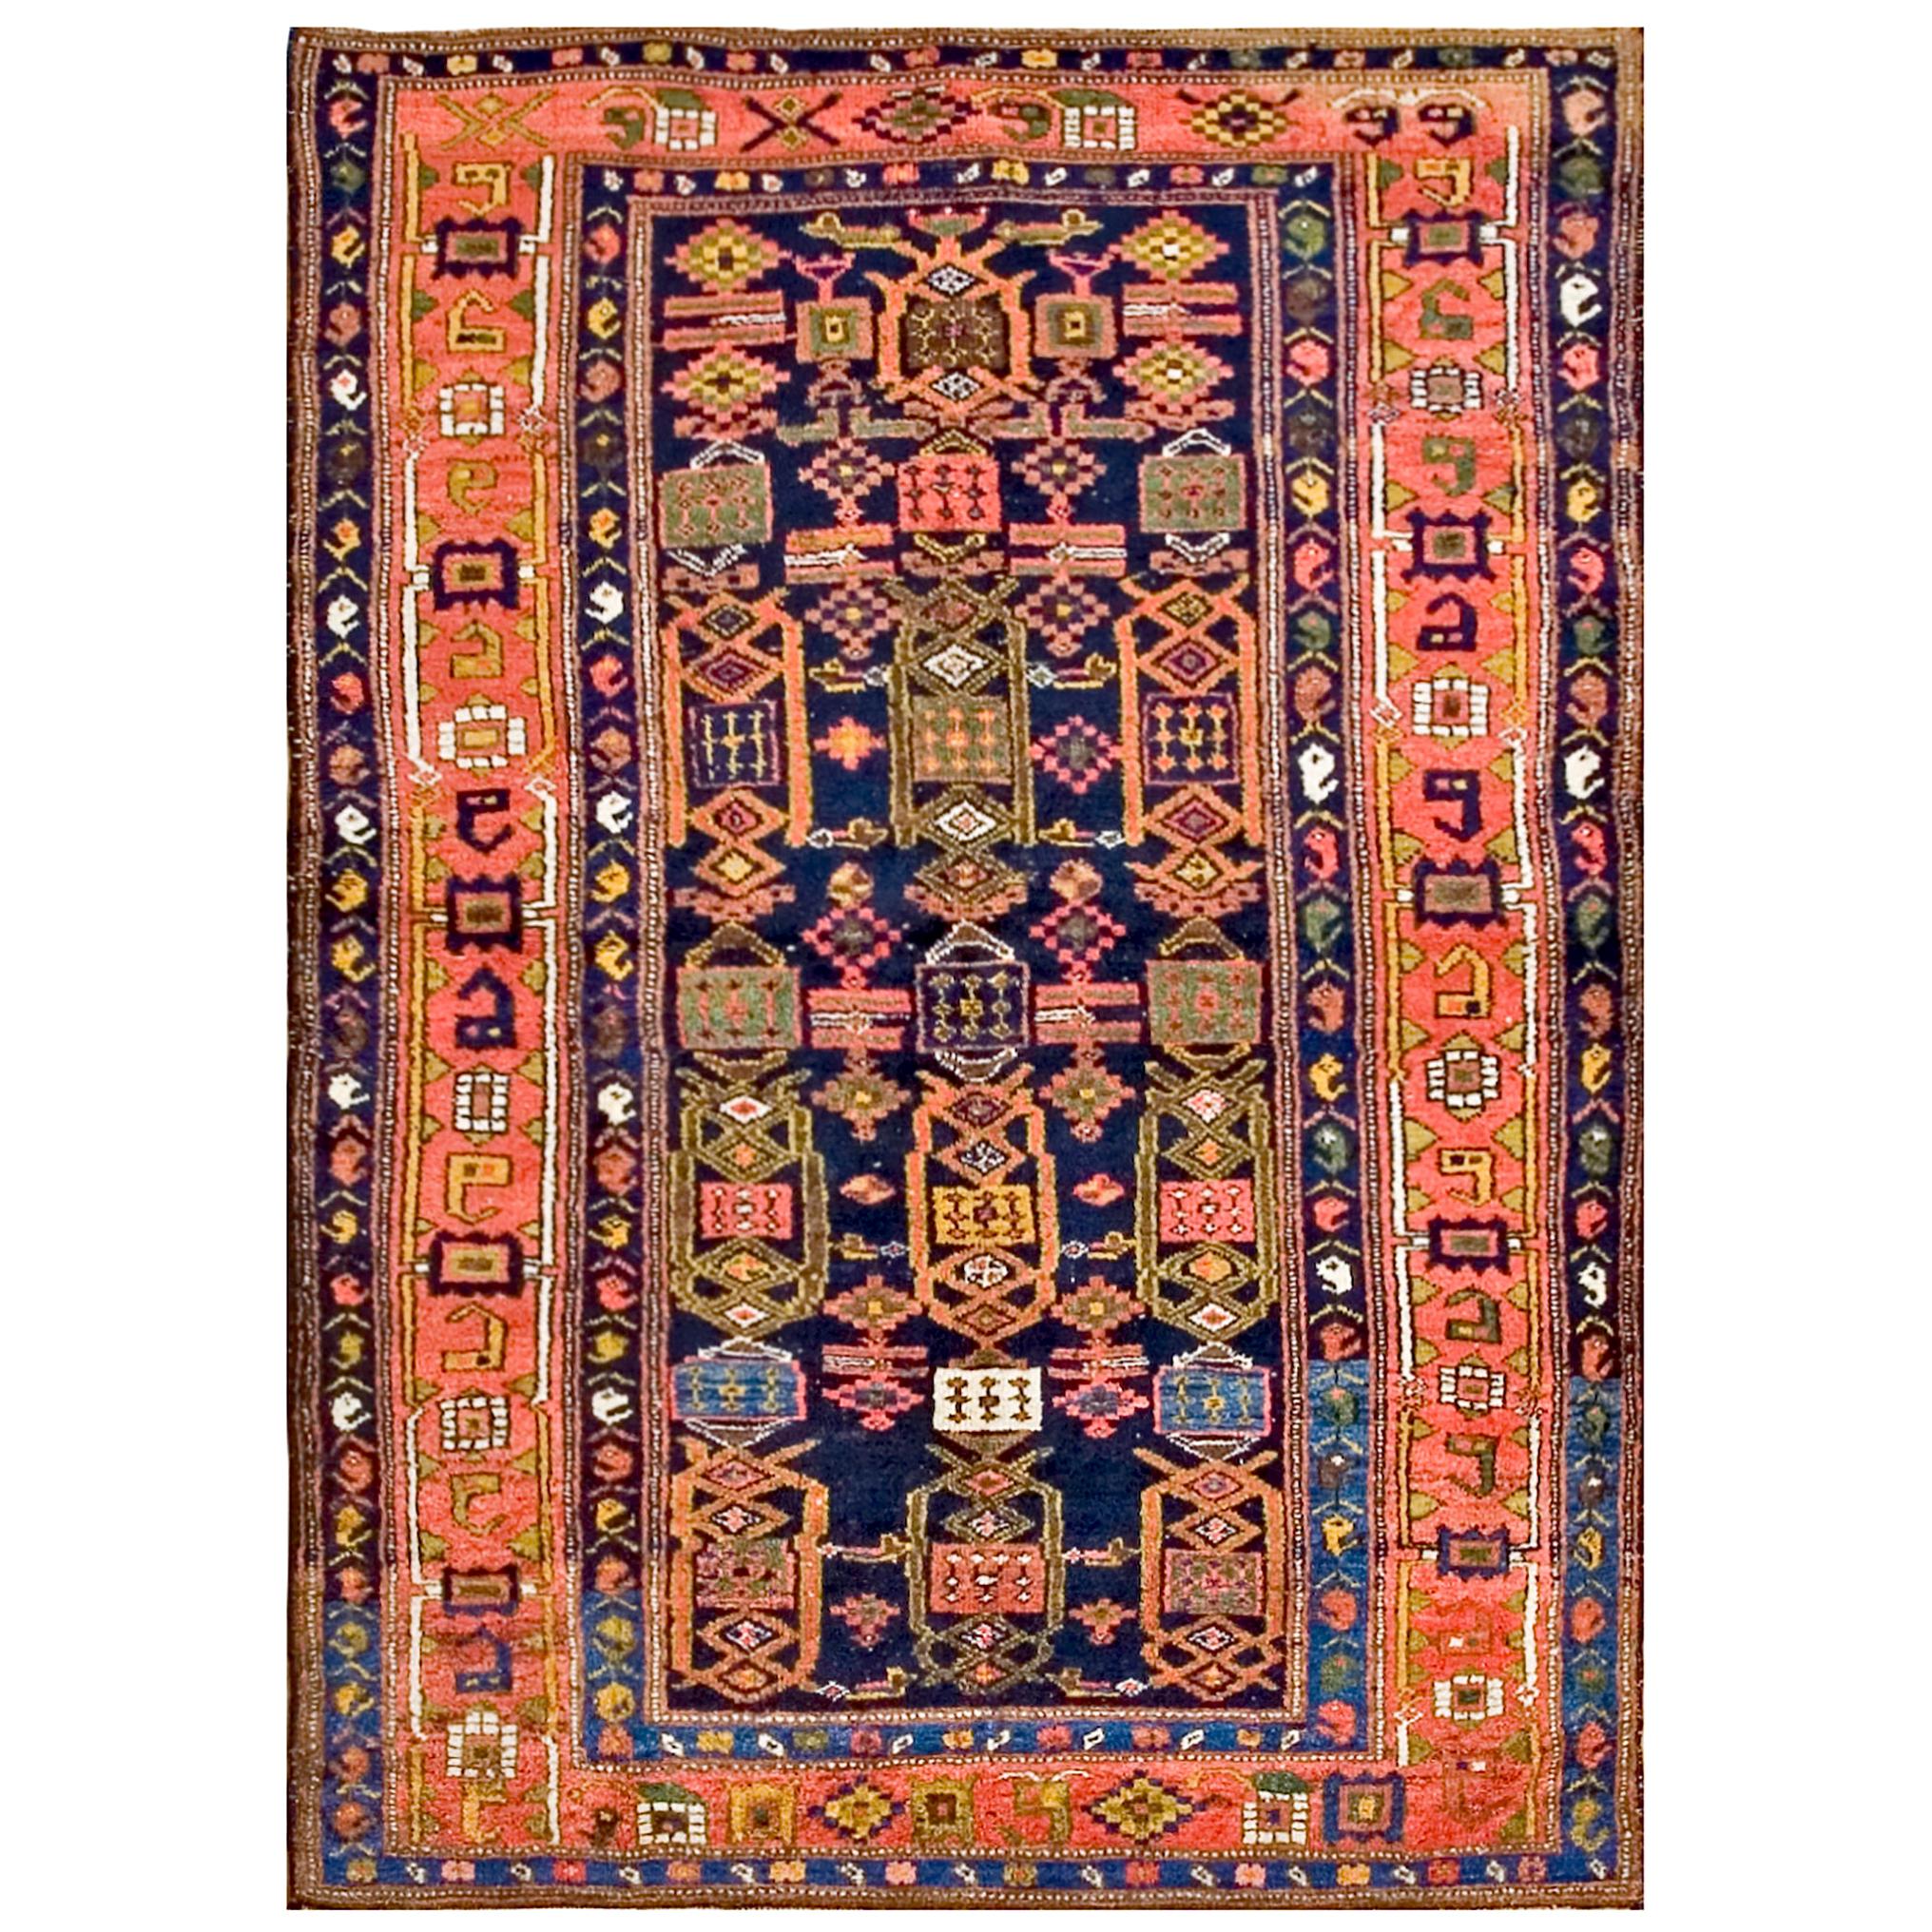 Early 20th Century W. Persian Kurdish Carpet ( 4'9" x 6'10" - 145 x 208 )